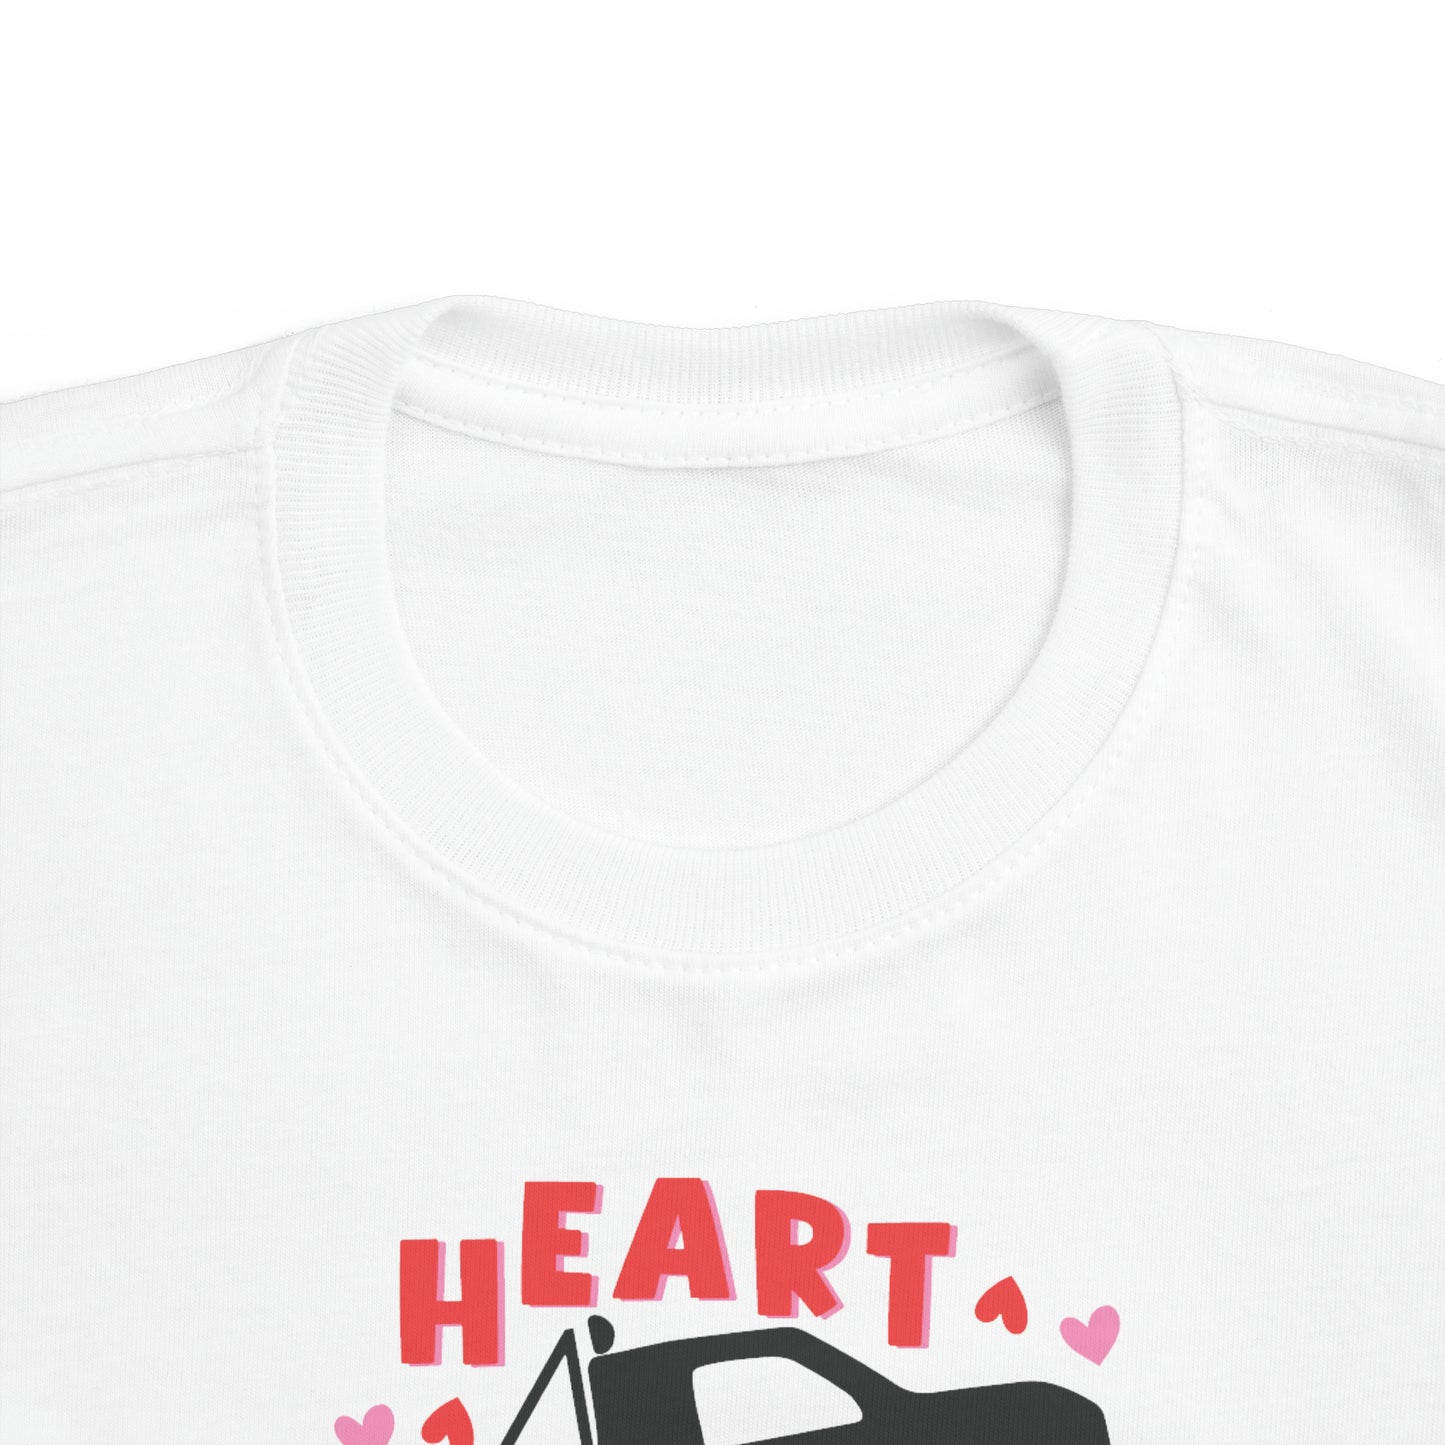 heart breaker monster truck valentines day Toddler's Fine Jersey Tee